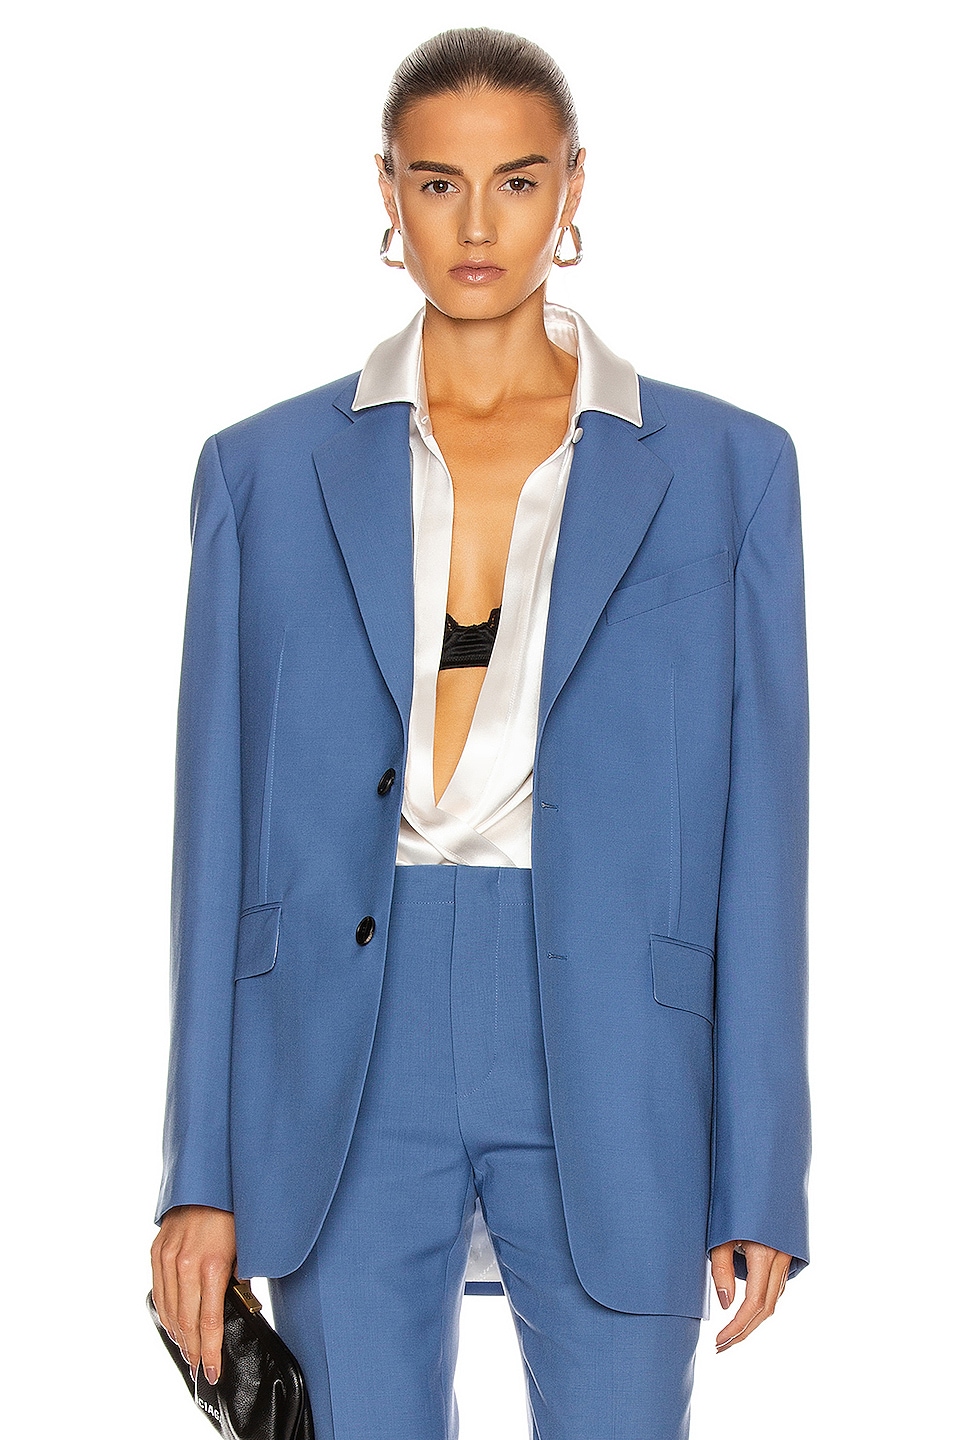 Givenchy Notch Lapel Jacket in Steel Blue | FWRD